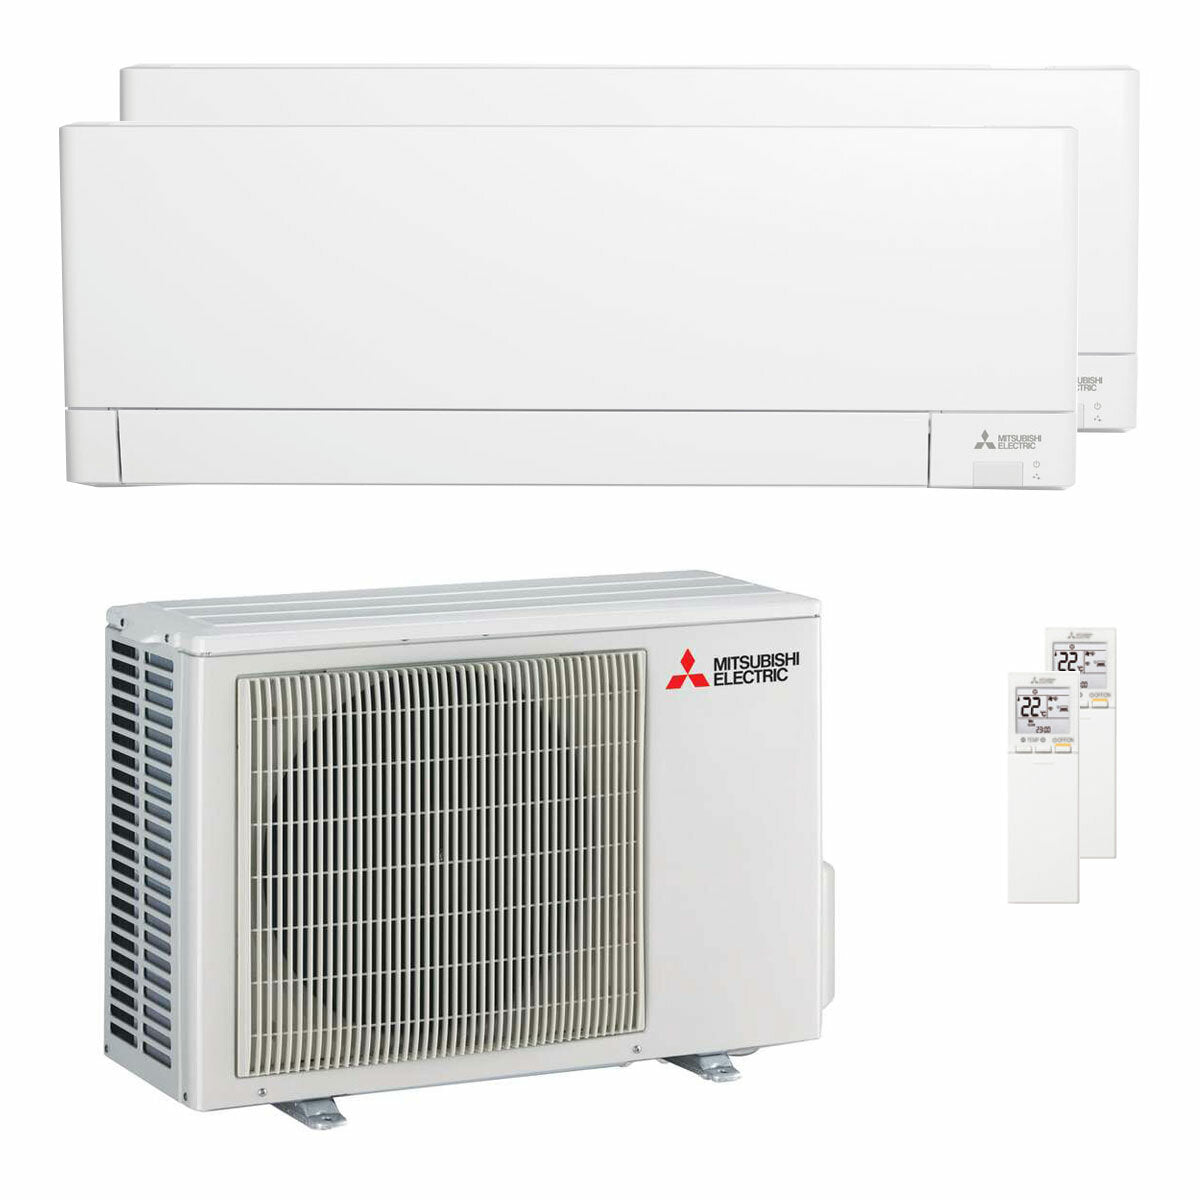 Mitsubishi Electric air conditioner AY Series dual split 12000+12000 BTU inverter A++ wifi outdoor unit 5.3 kW